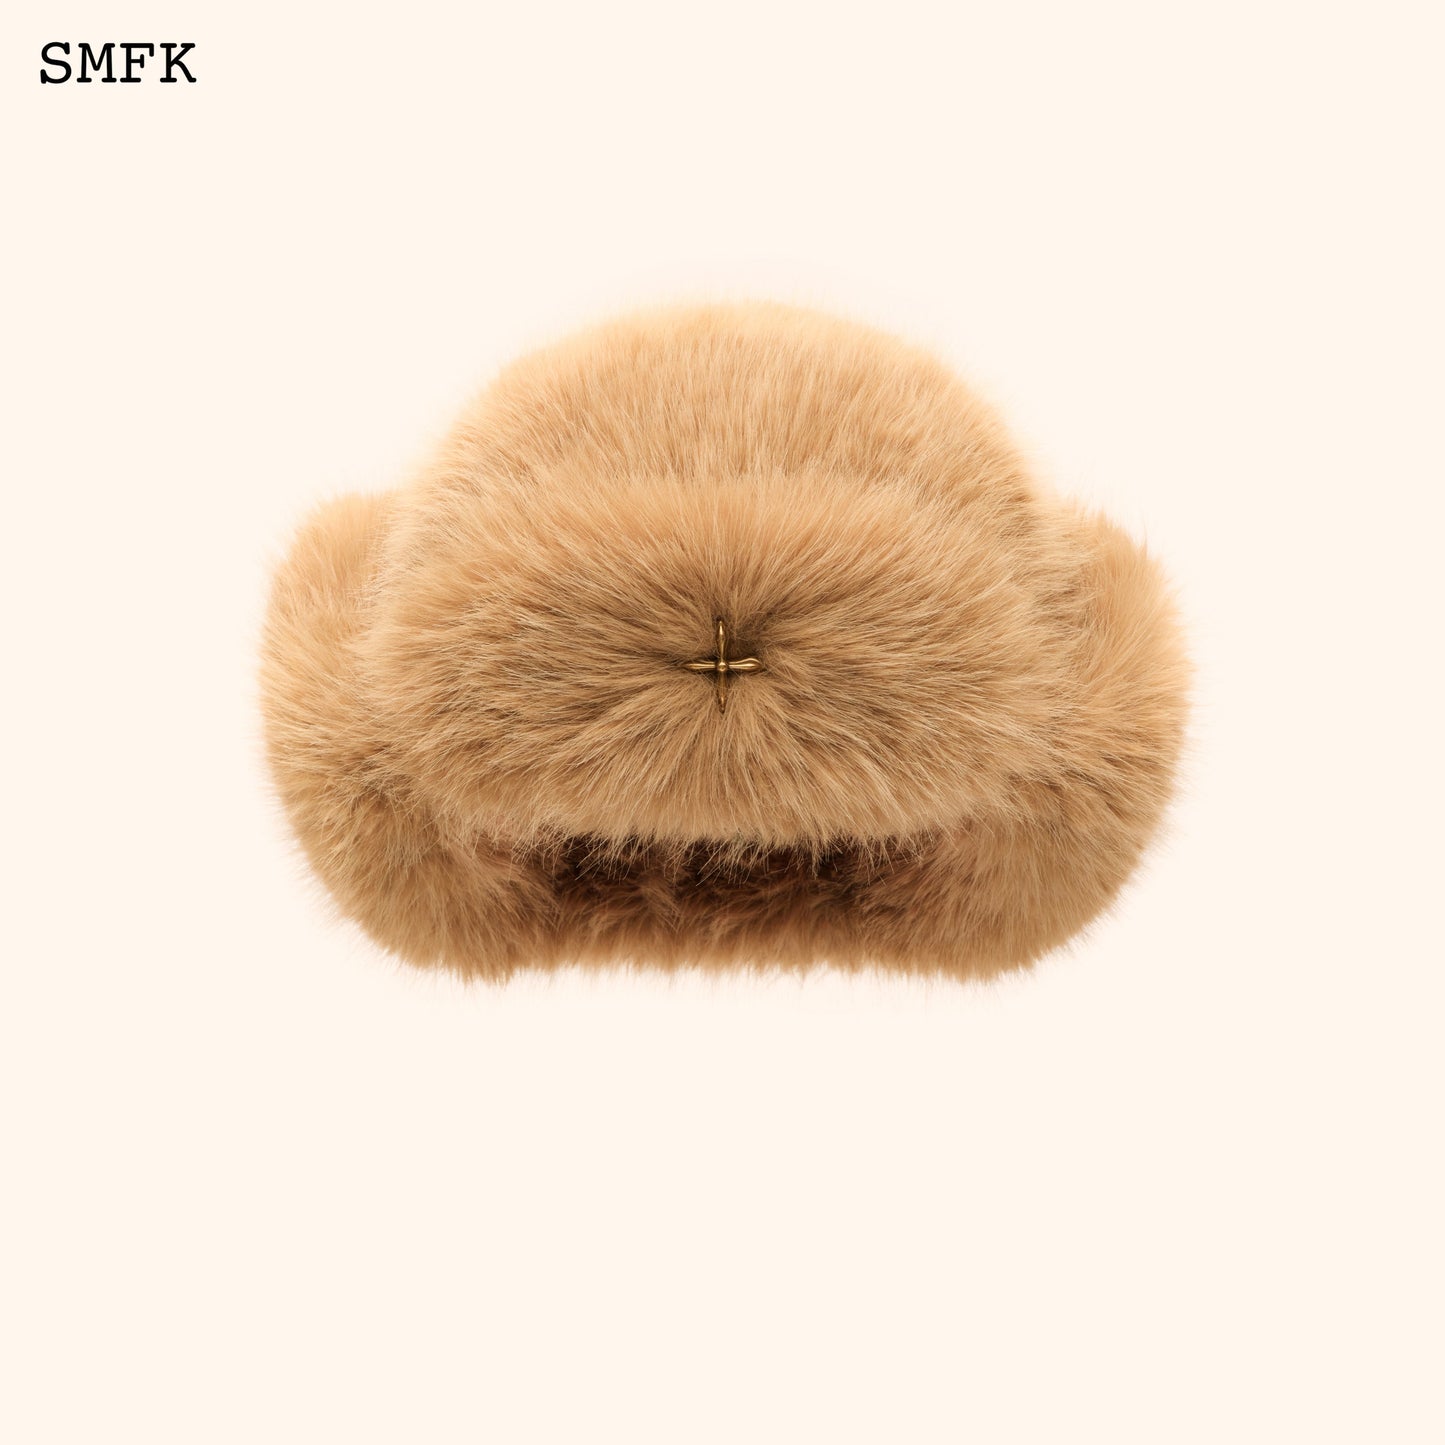 SMFK Compass Cross Winter Fur Hat In Wheat